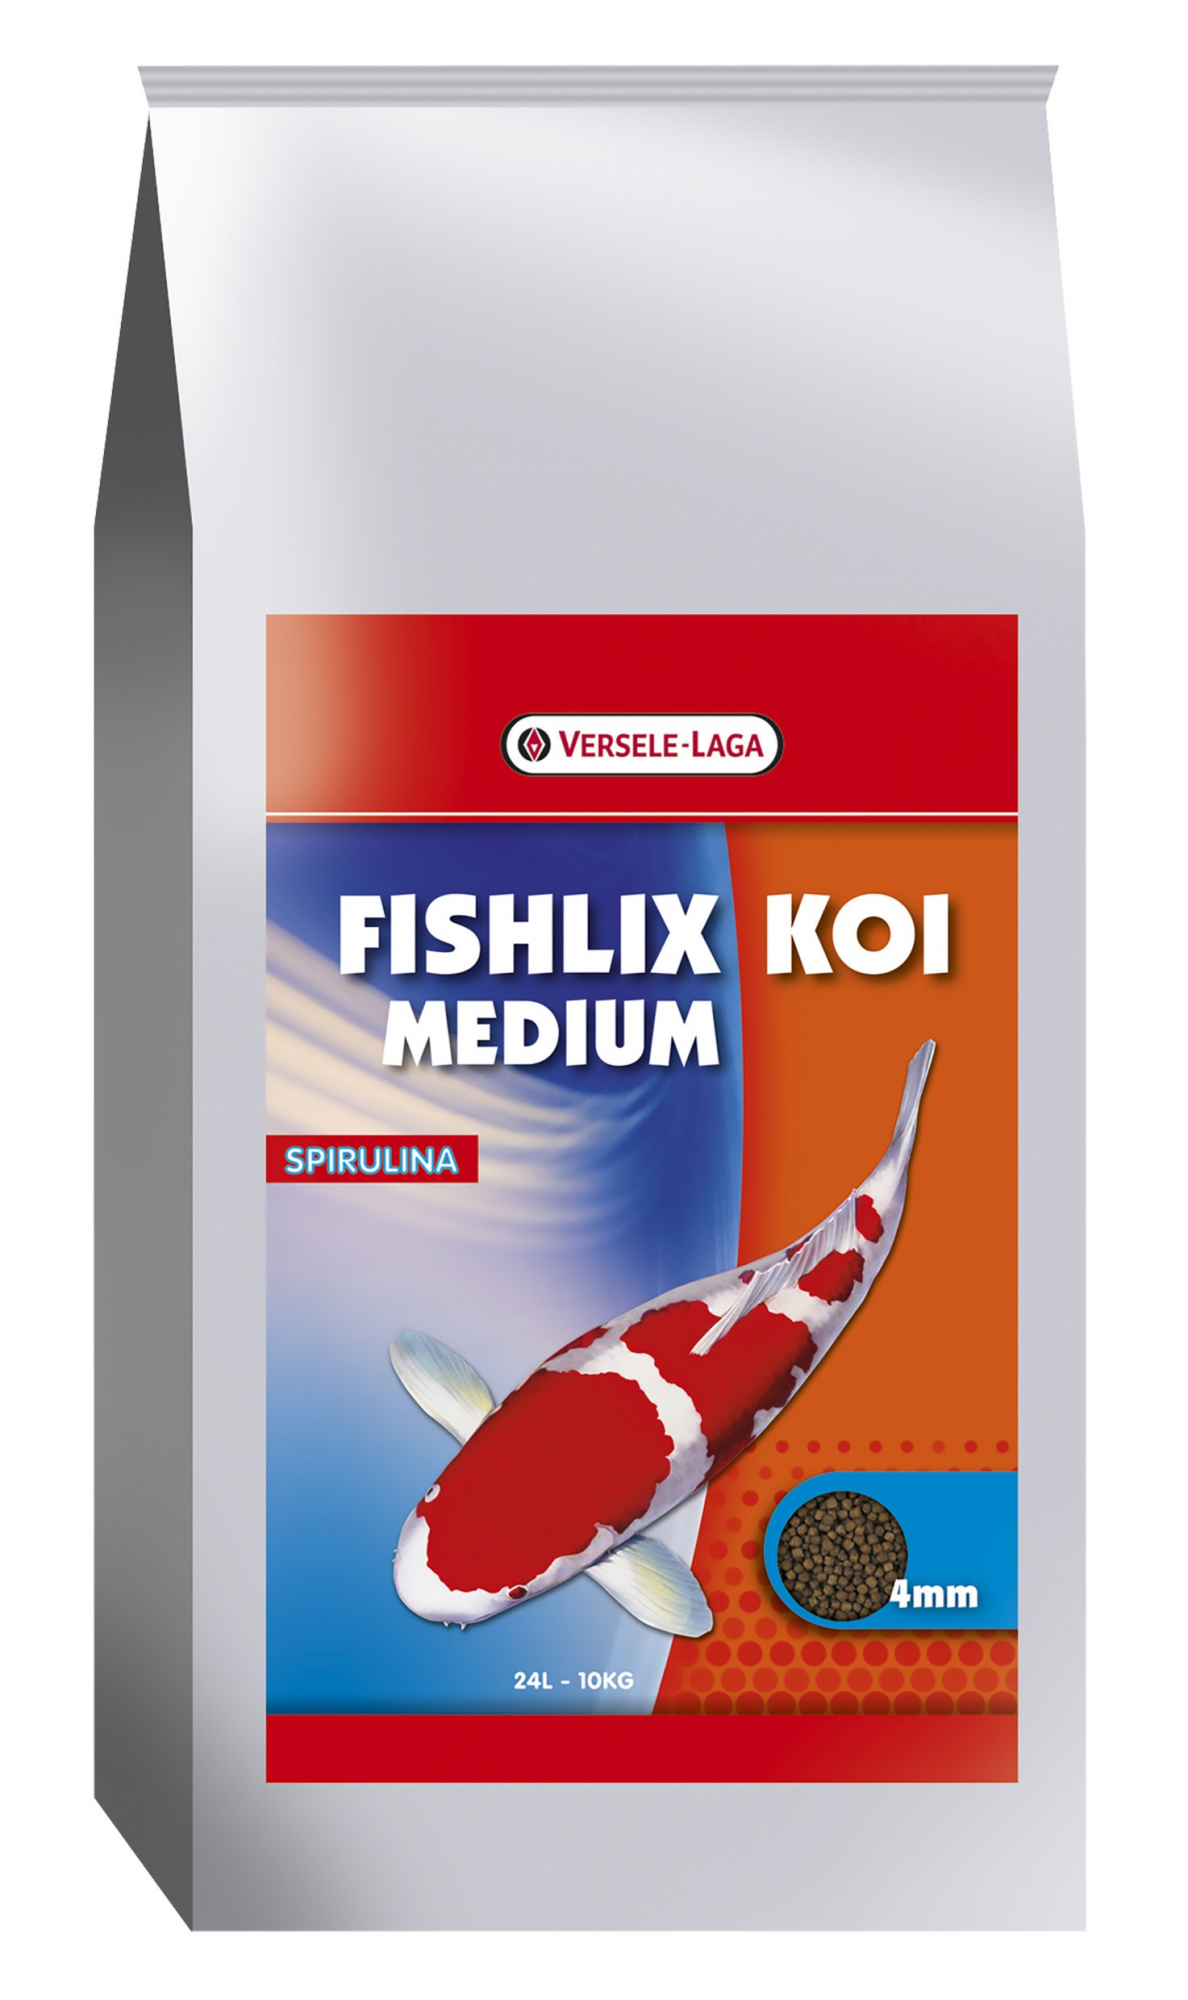 Fishlix Koi Medium 4 mm Granulado flutuante para koi